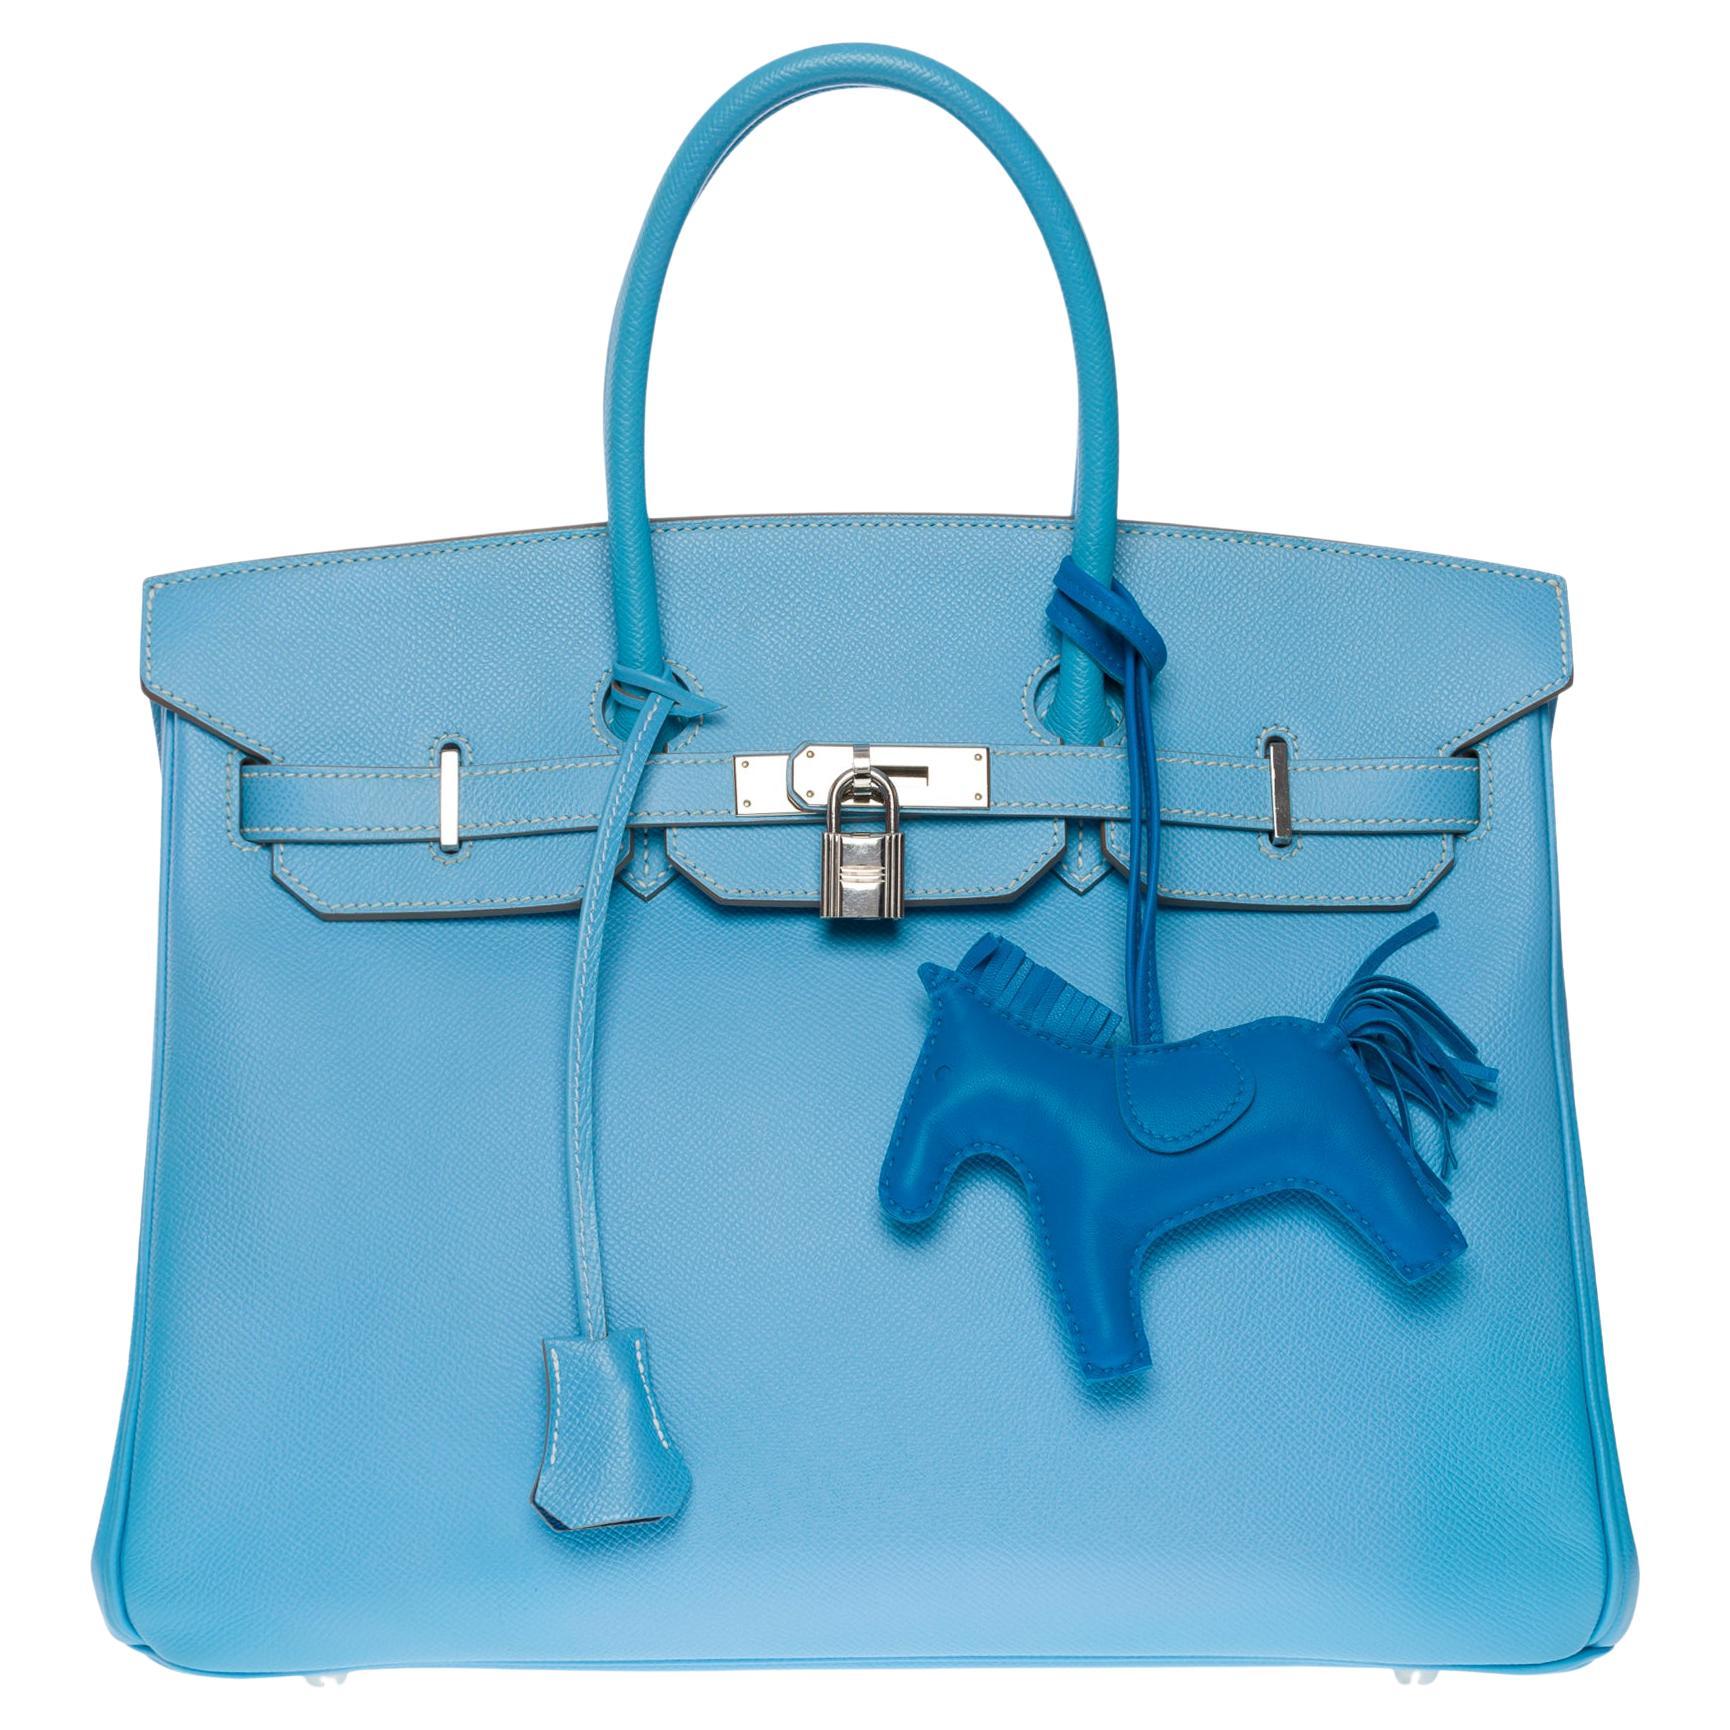 Rare Hermès Birkin 35 Candy handbag in Blue Celeste Epsom leather,  SHW